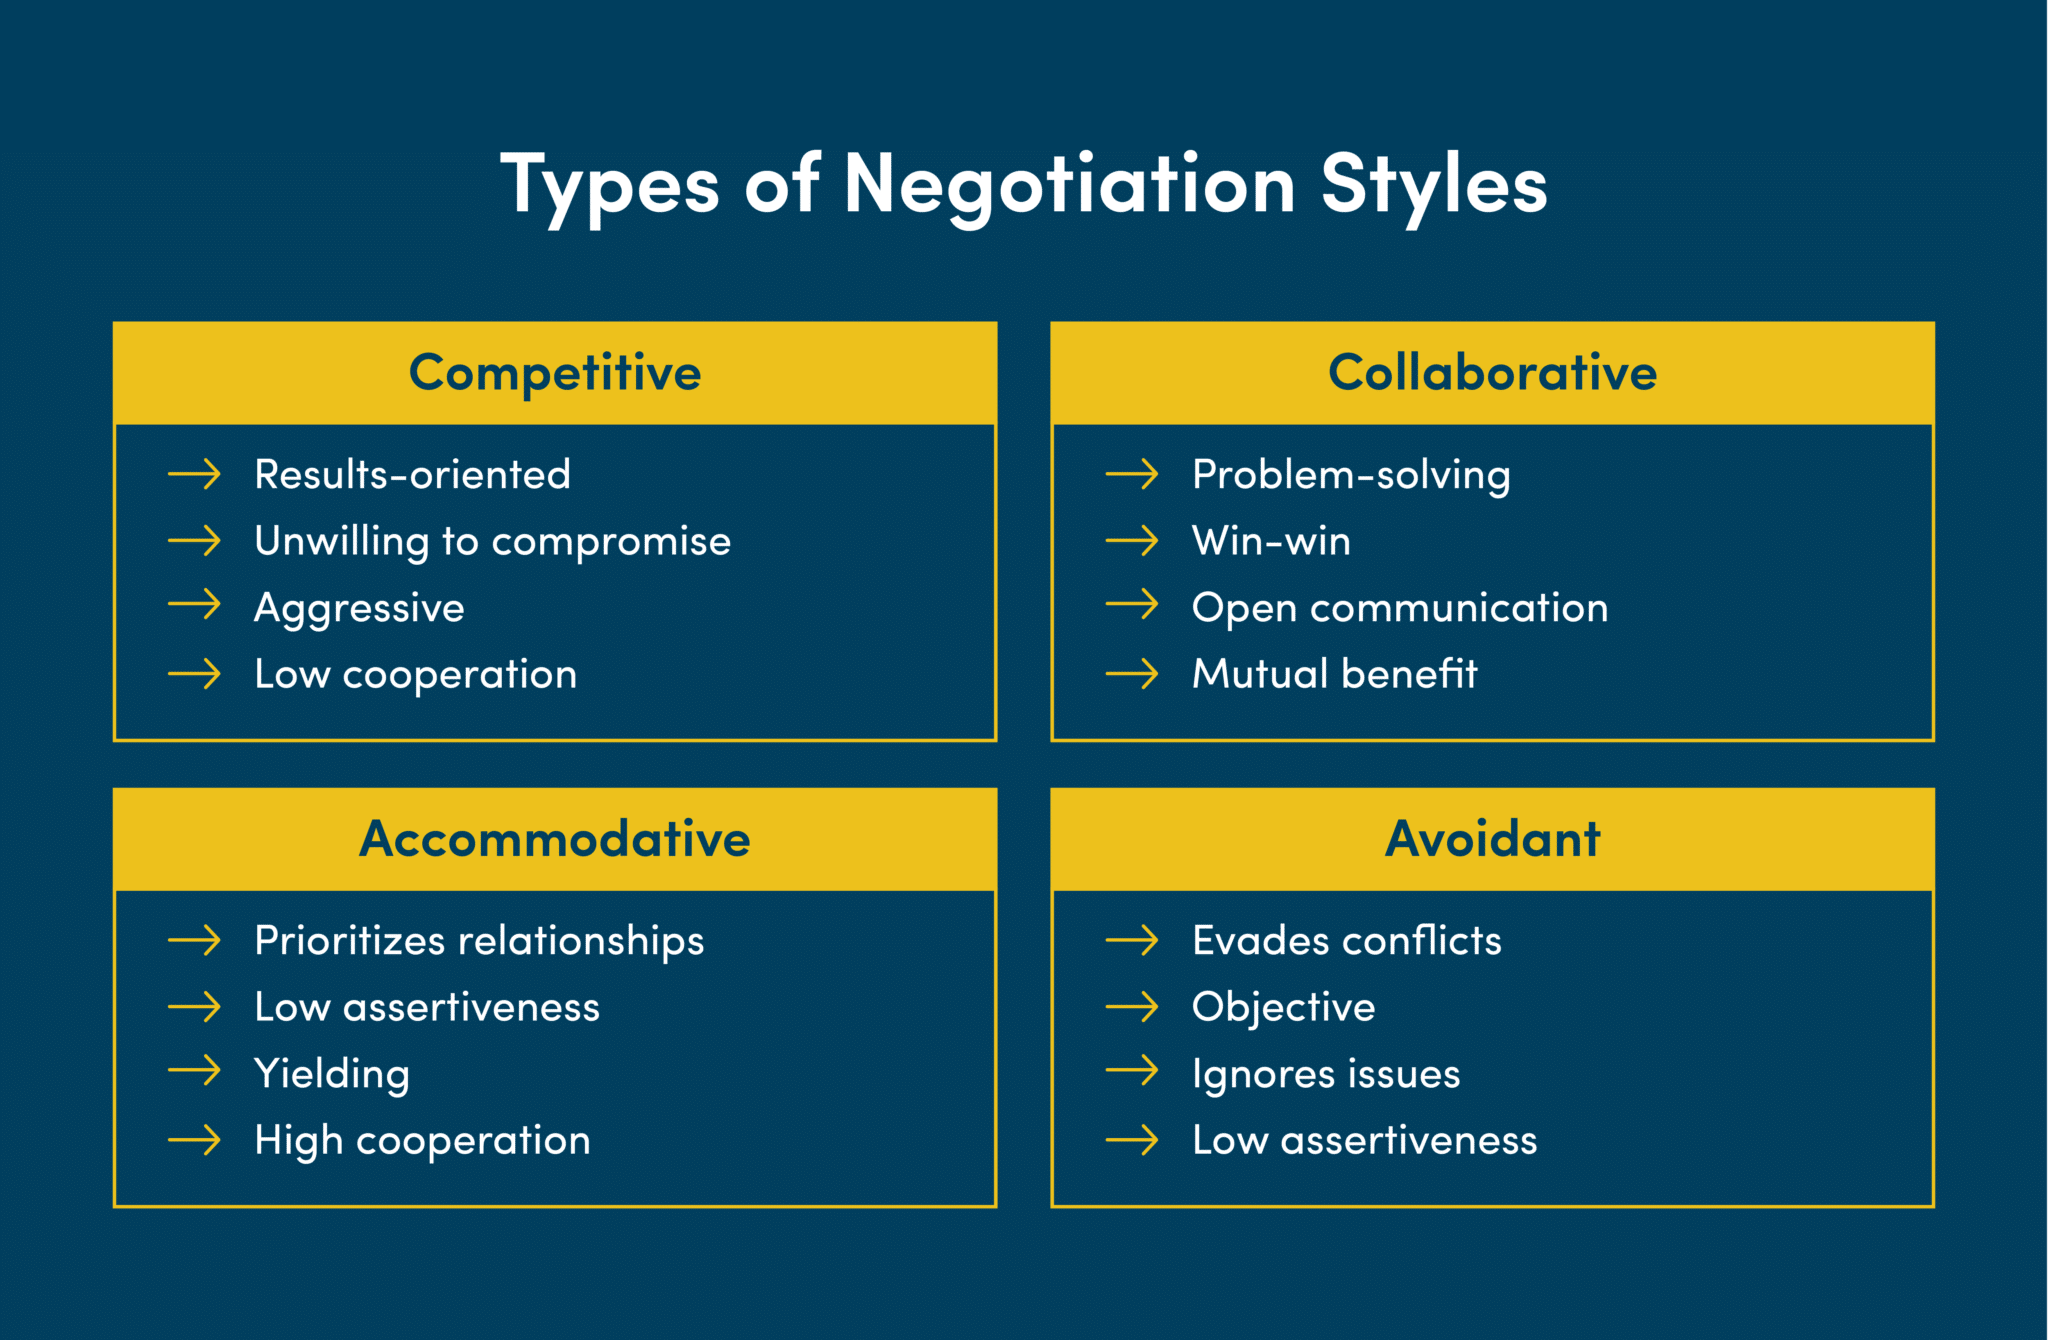 Types of negotiation styles